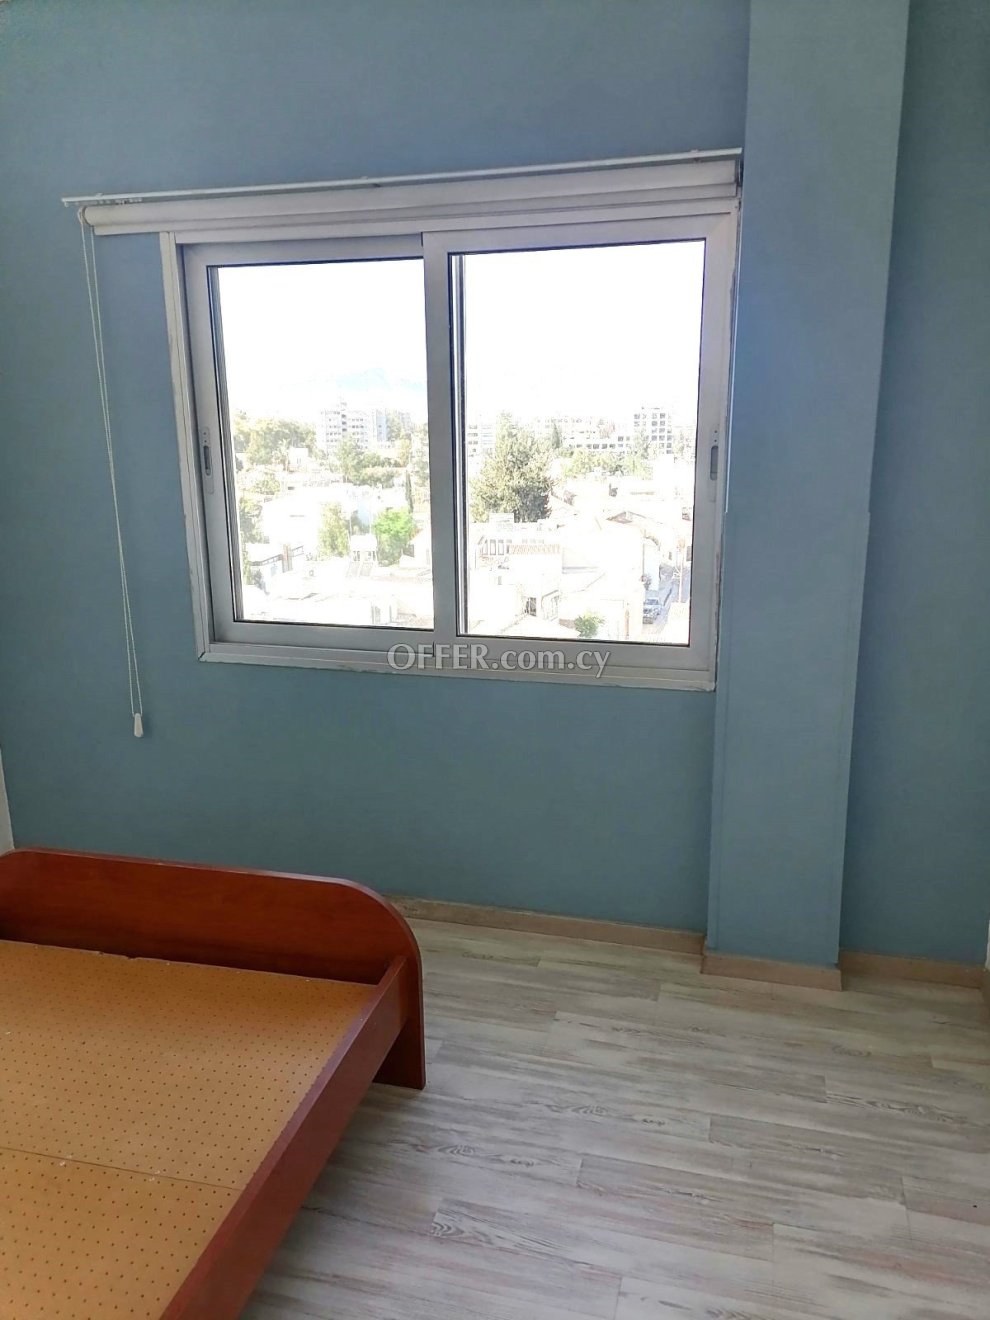 Apartment (Penthouse) in Agioi Omologites, Nicosia for Sale - 7